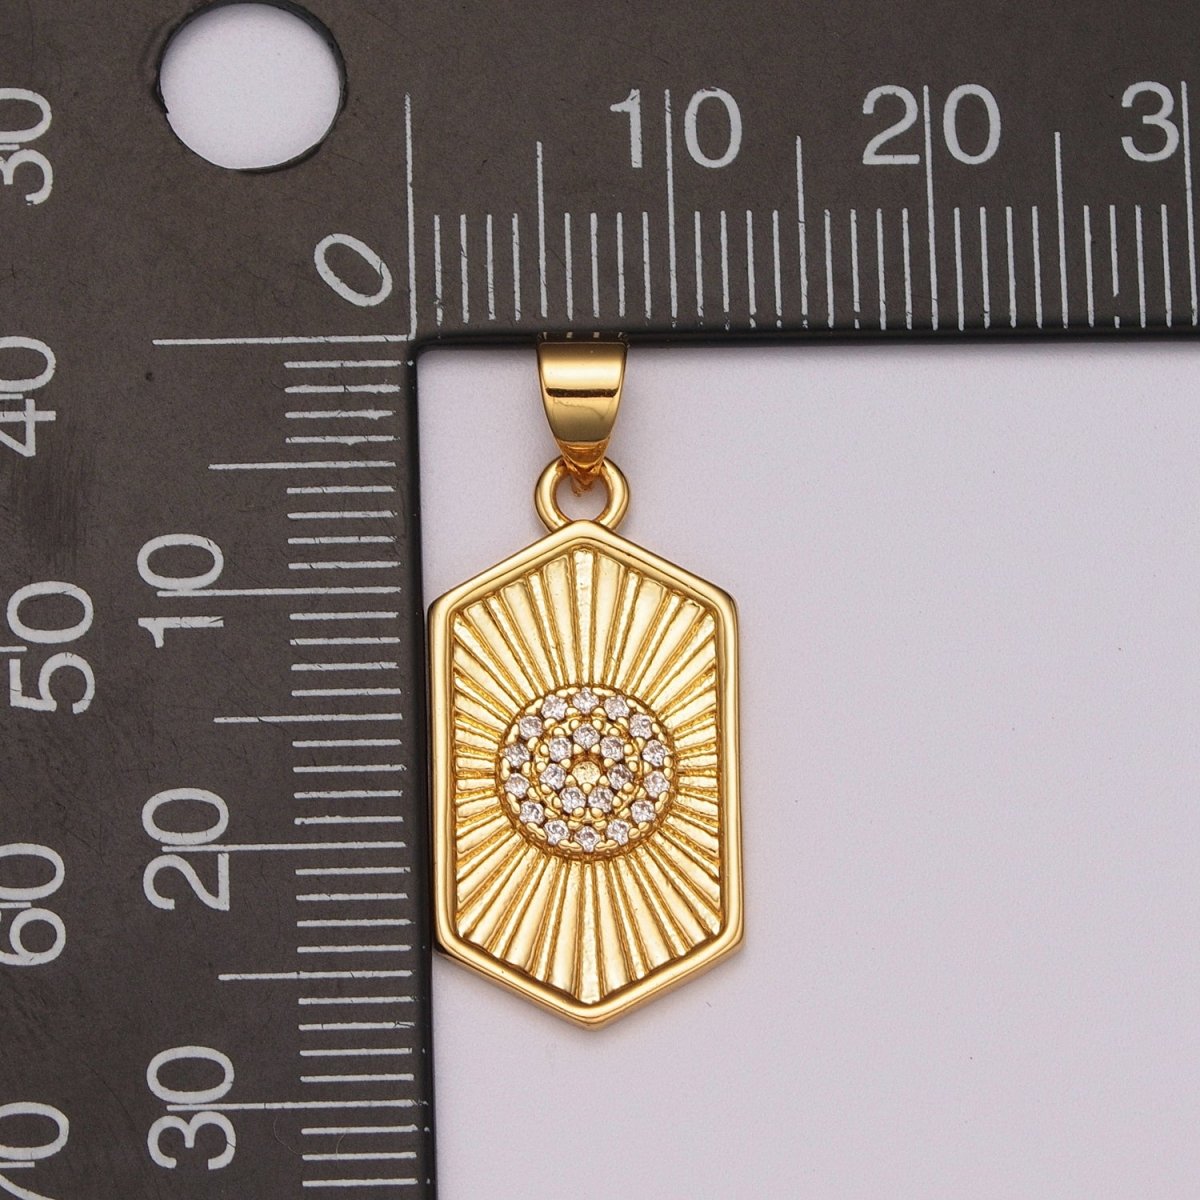 Dainty 14k Gold Filled Hexagon Medallion Pendant Gold Sunburst Charm Necklace Boho Chic Gold Geometric Necklace Celestial Jewelry Charm N-1413 - DLUXCA